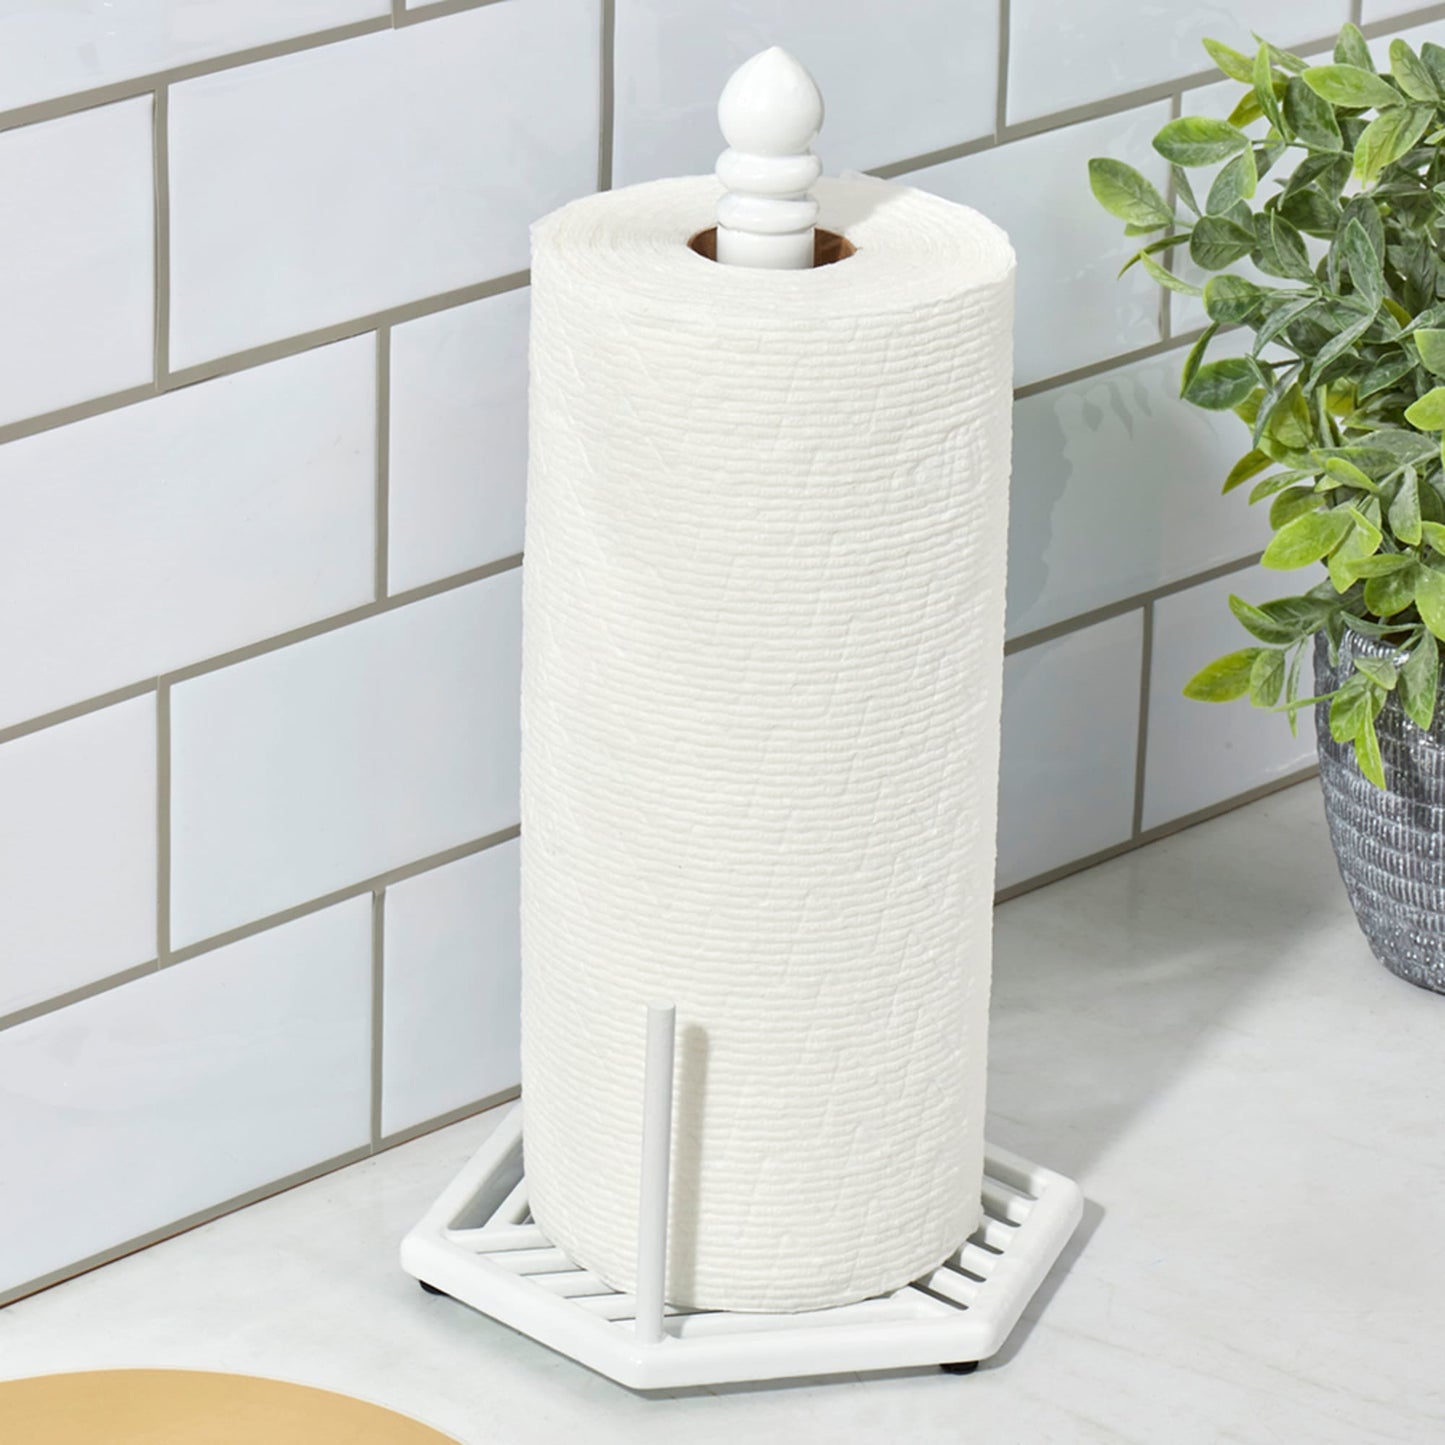 Rhino Toilet Paper / Paper Towel Holder - Cast Iron Countertop or Floor  Standing - Brown - 16 in. - Bed Bath & Beyond - 19432331